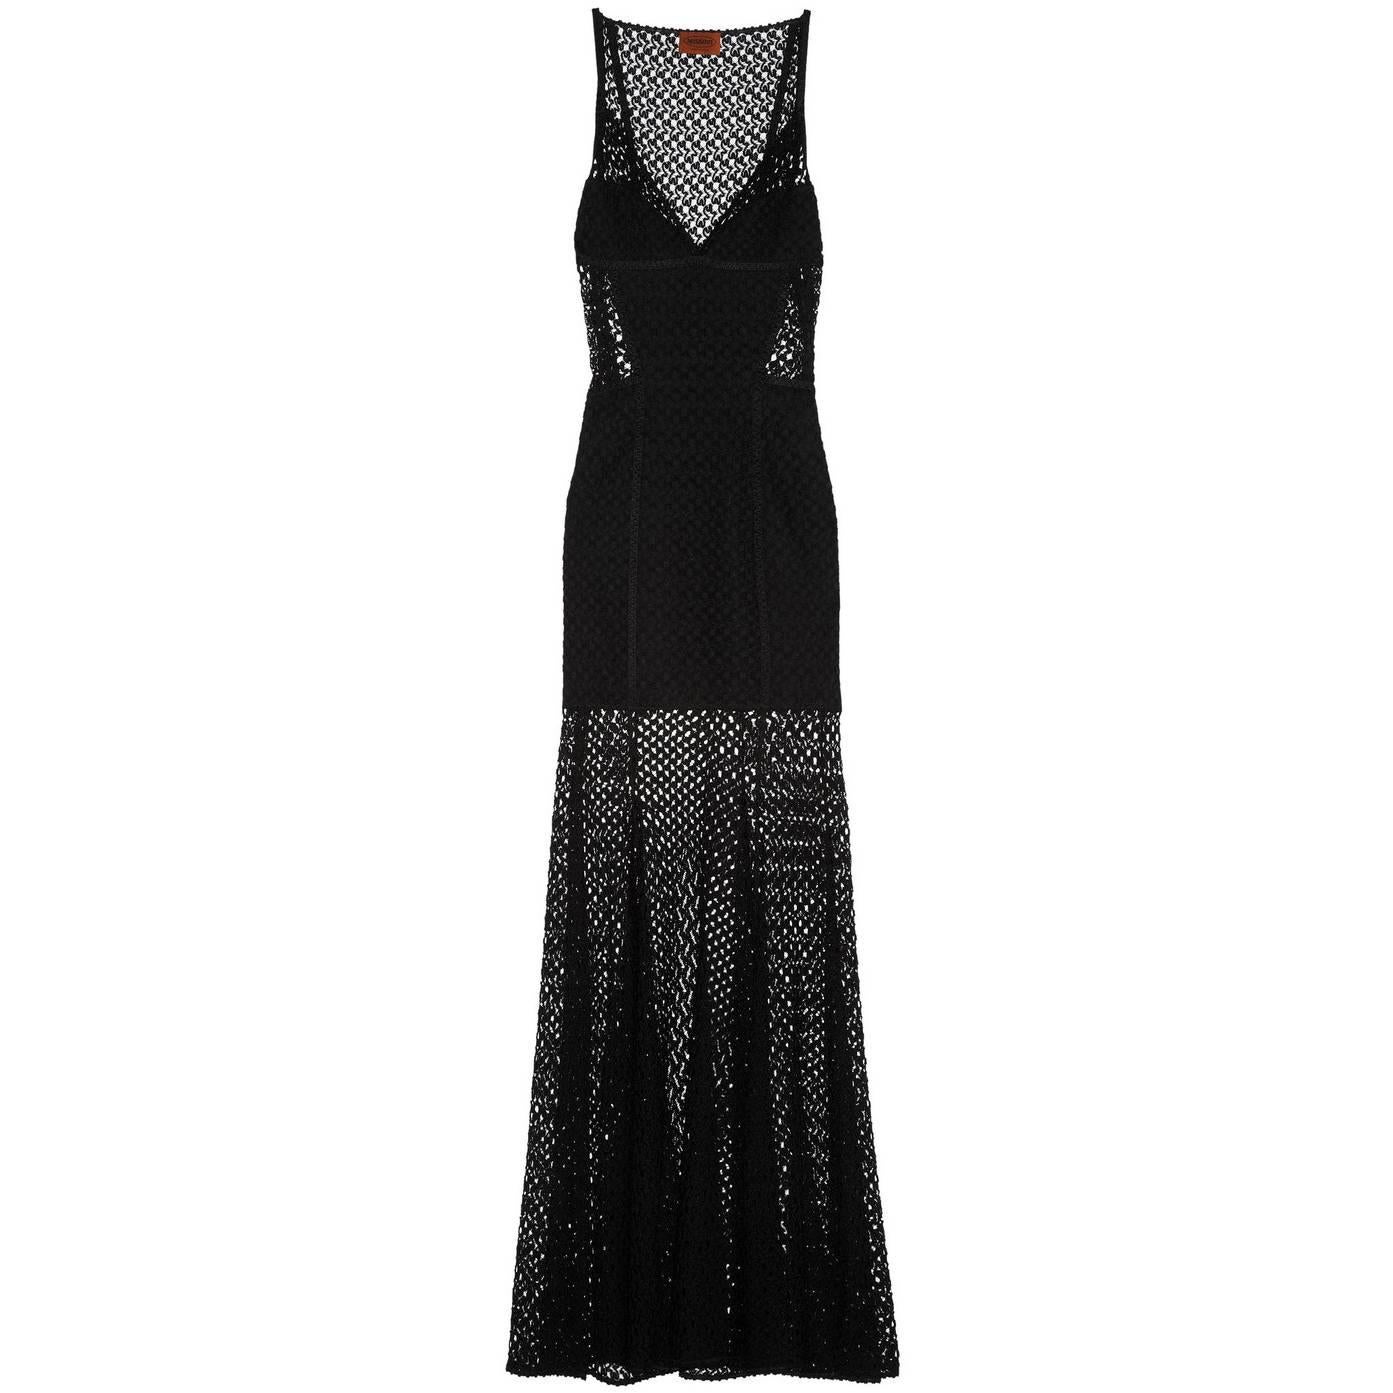 Breathtaking Missoni Black Lurex Crochet Knit Evening Dress Gown